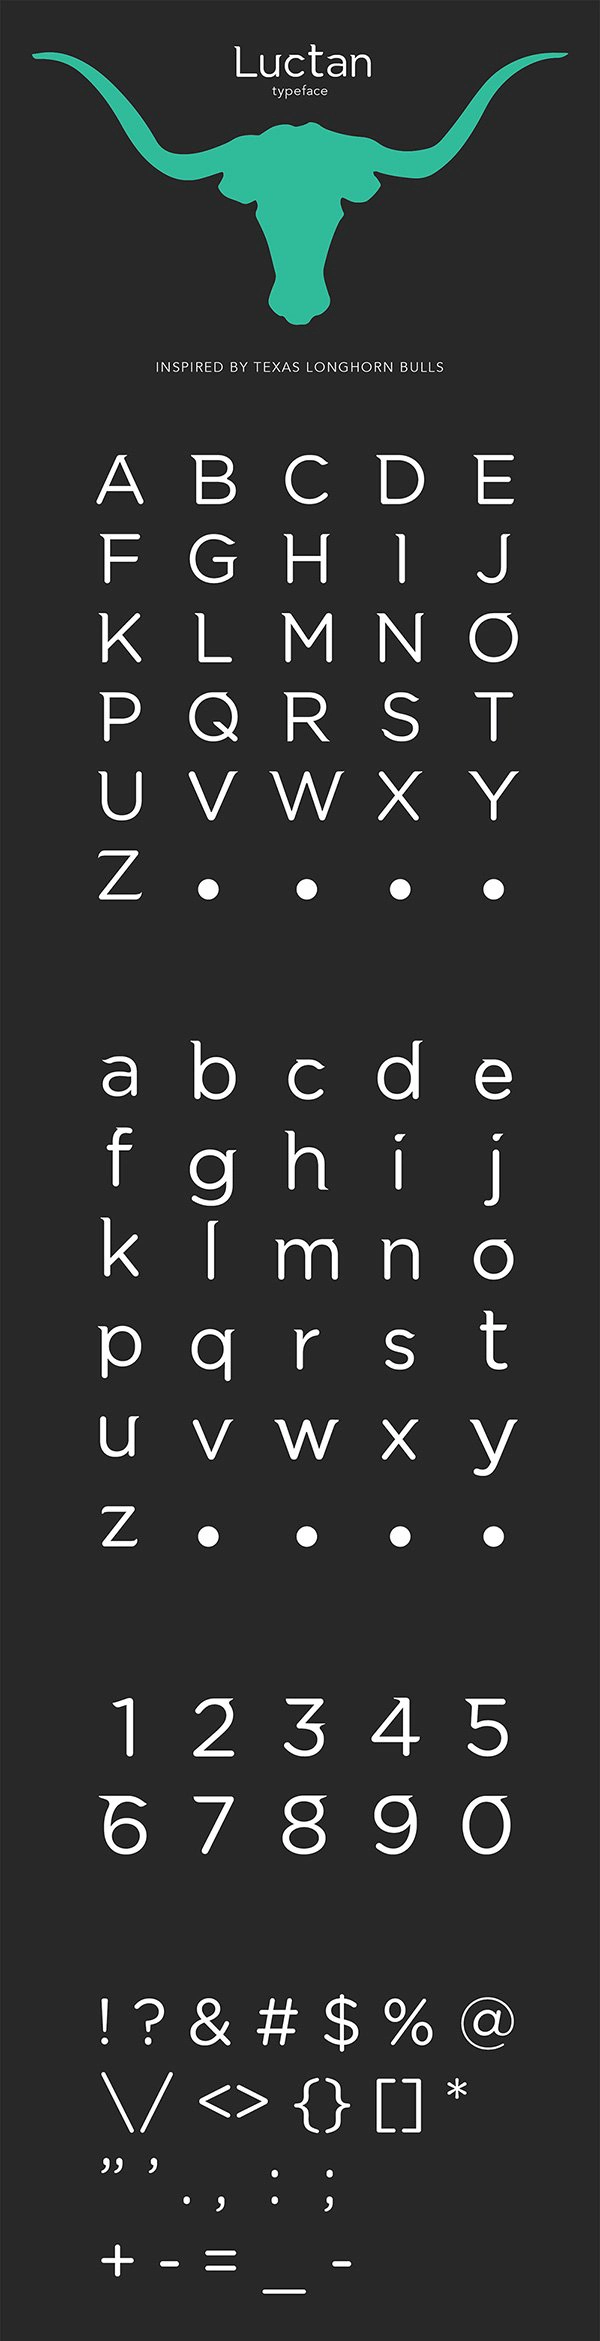 Luctan Typeface